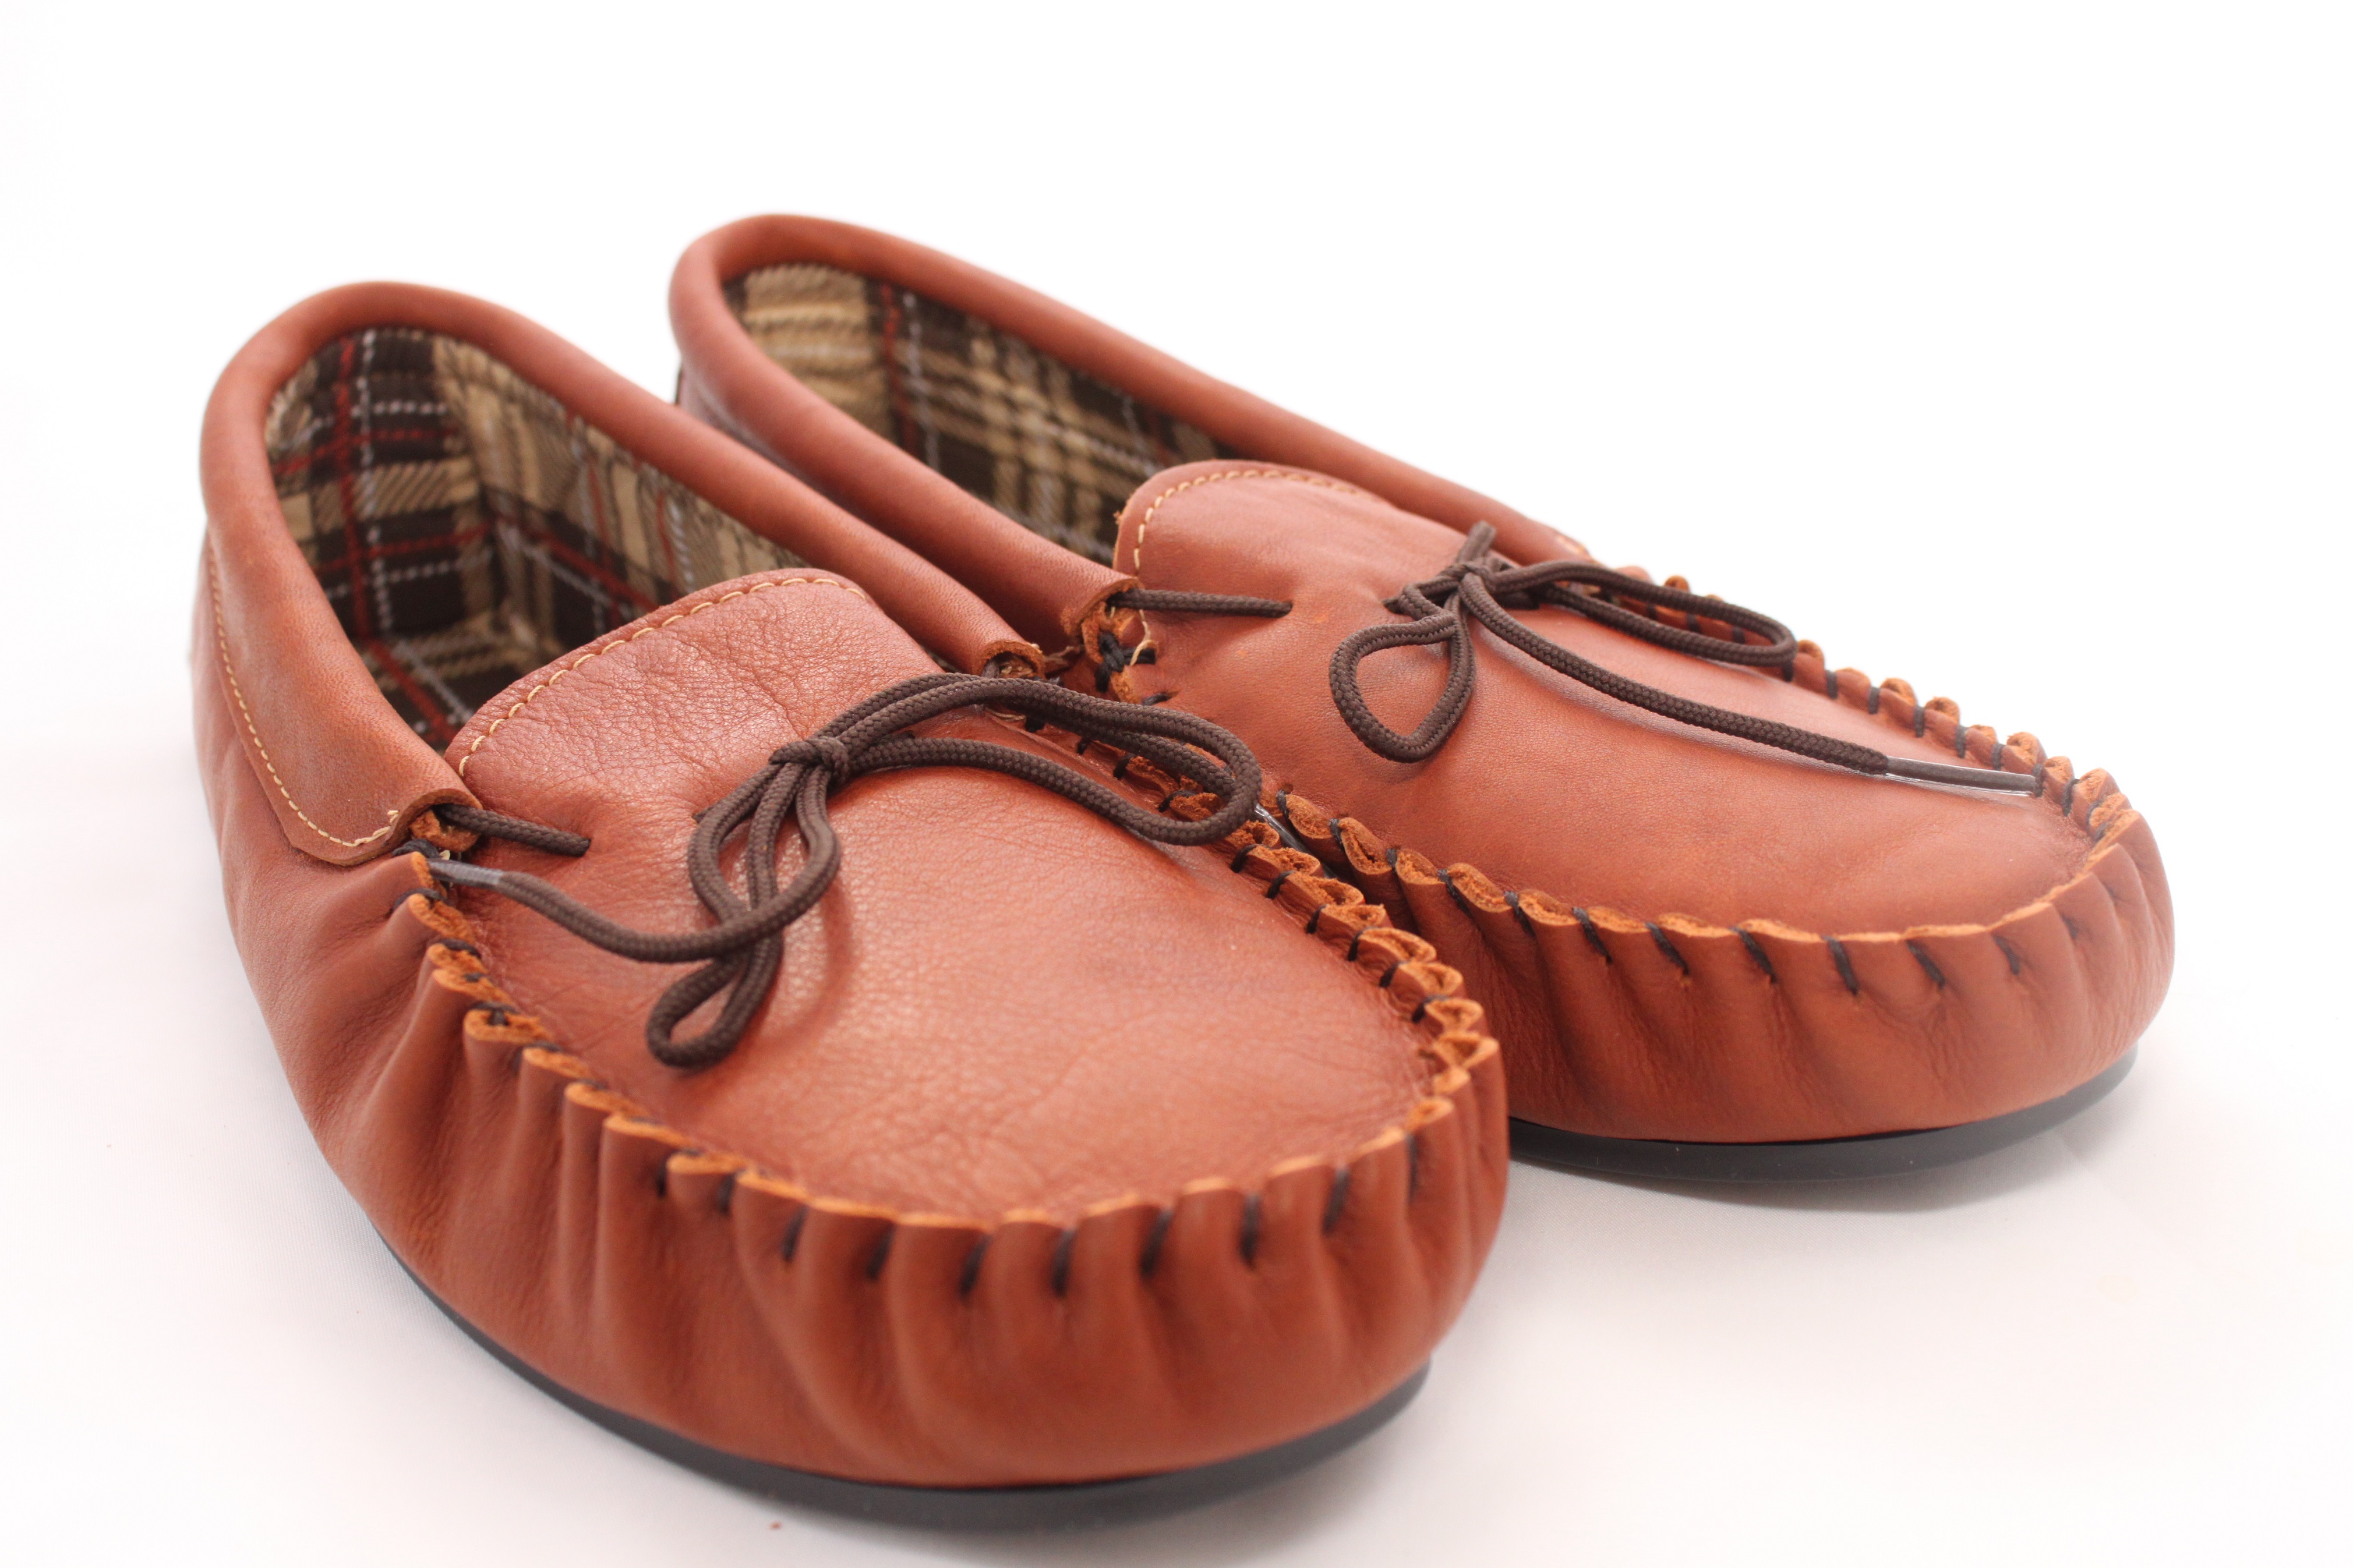 Men's Leather Moccasins Style Slipper - Radford Leathers